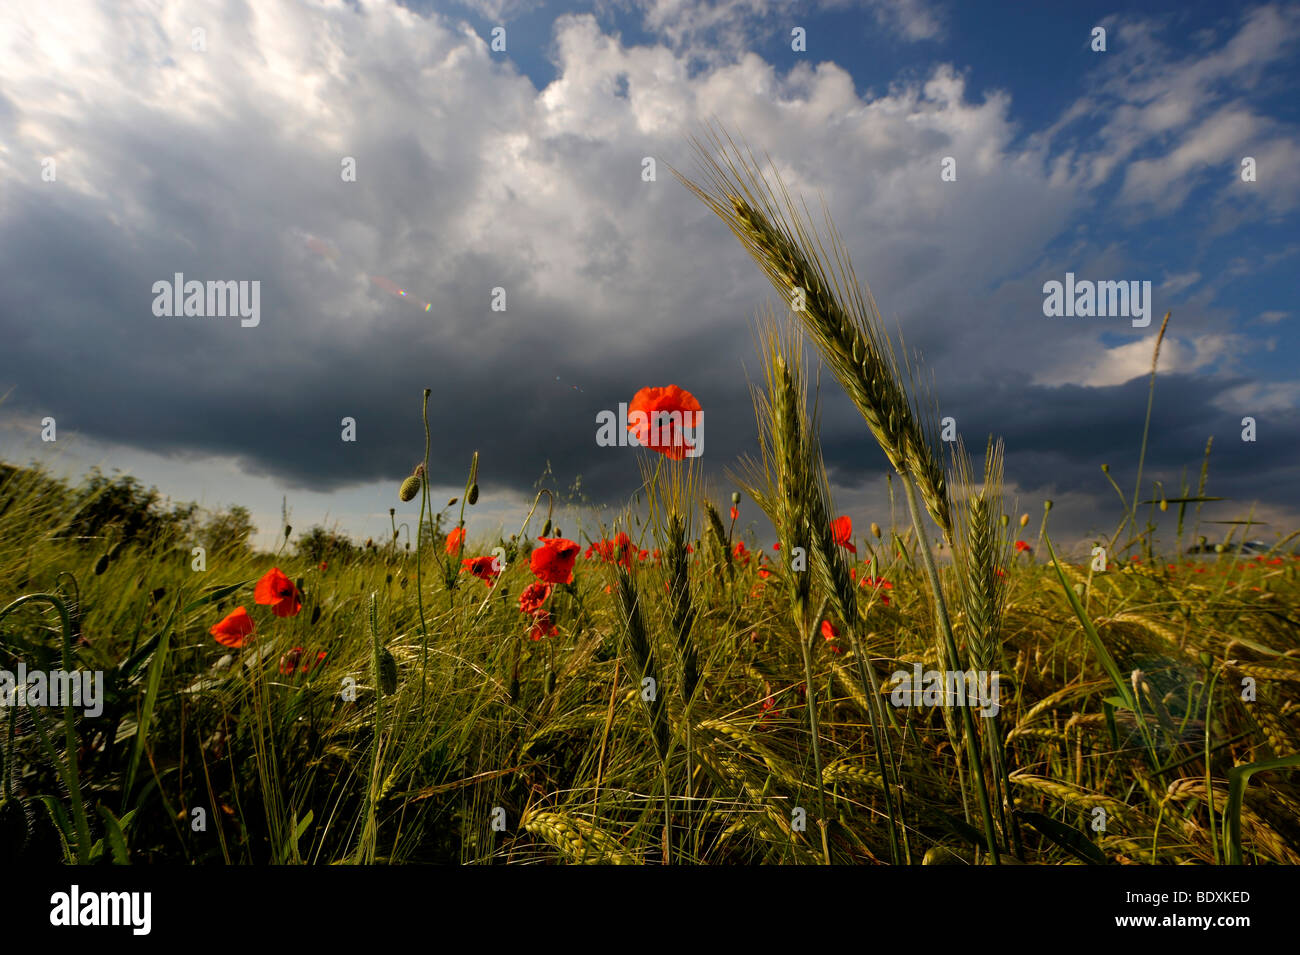 Cornfield with poppies against stormy sky, Tuerkheim, Unterallgaeu district, Bavaria, Germany, Europe Stock Photo